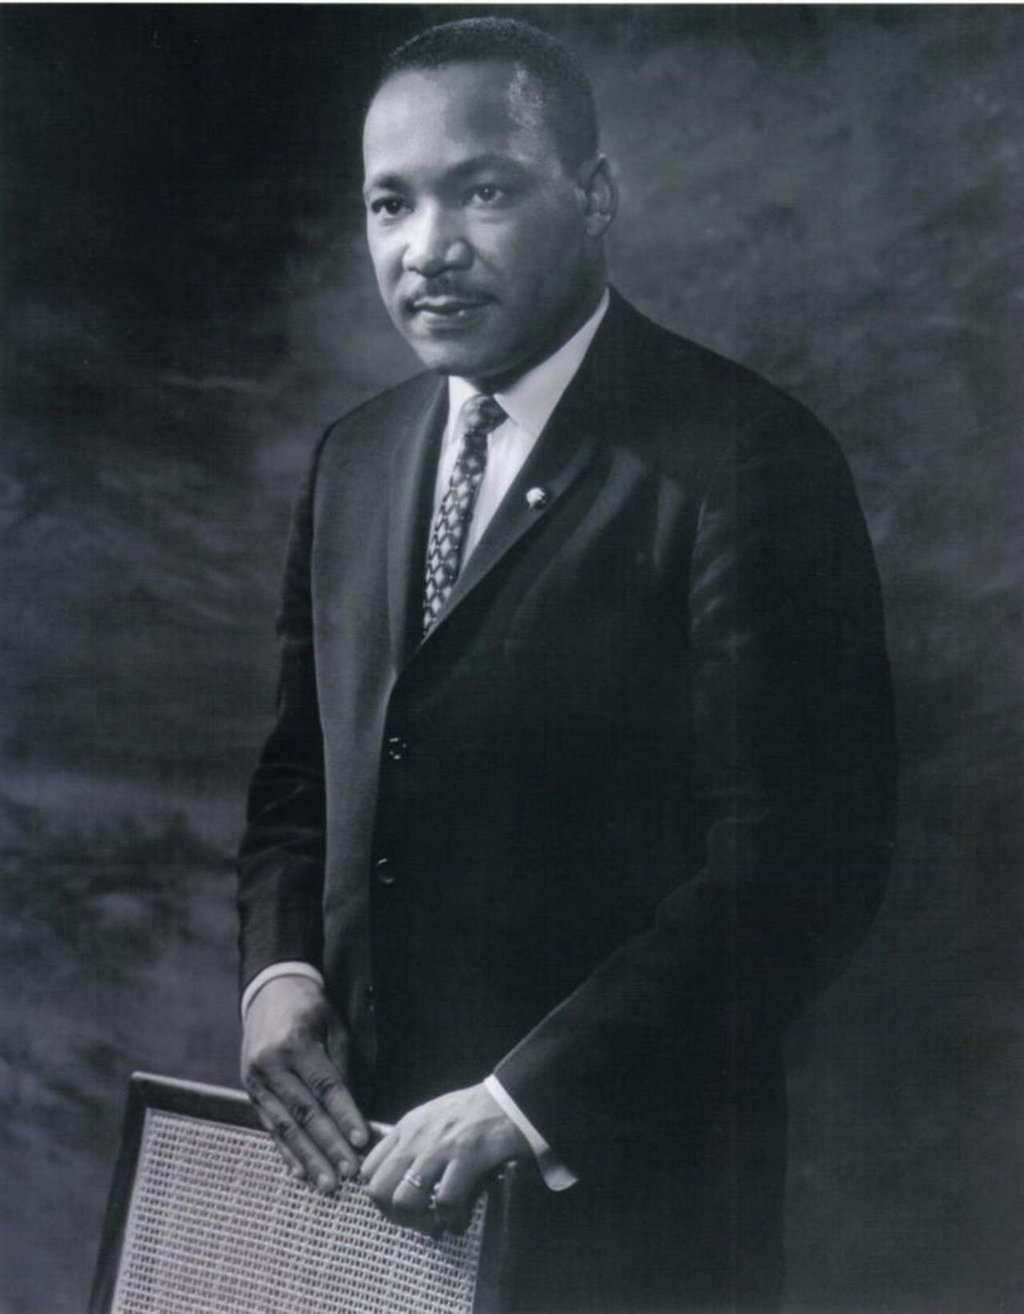 1929: Llega al mundo Martin Luther King Jr., histórico líder y activista americano